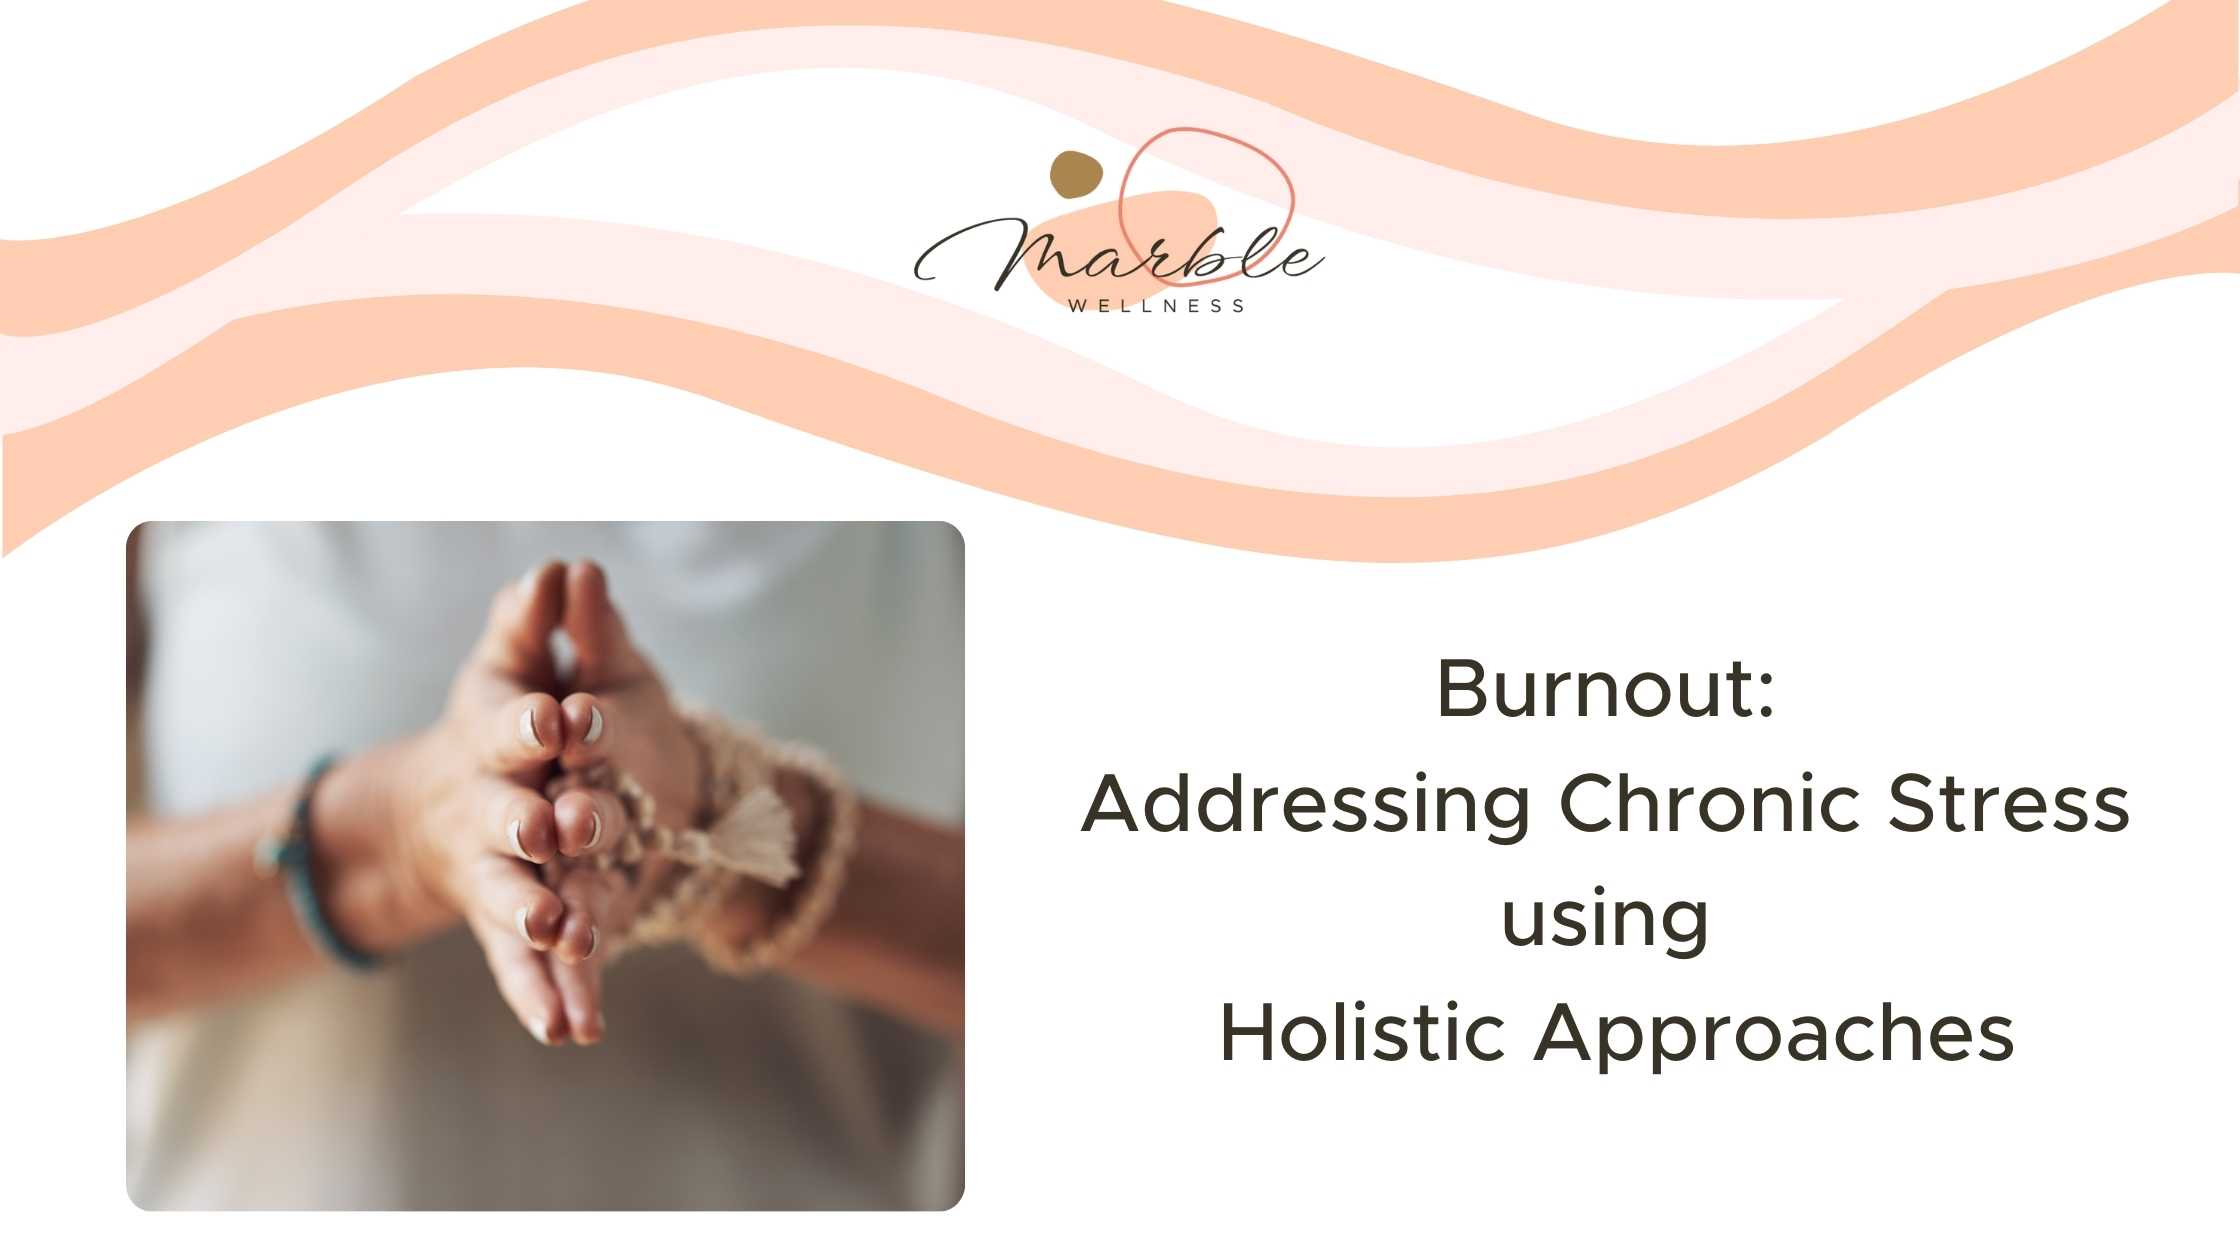 Burnout: Addressing Chronic Stress using Holistic Approaches